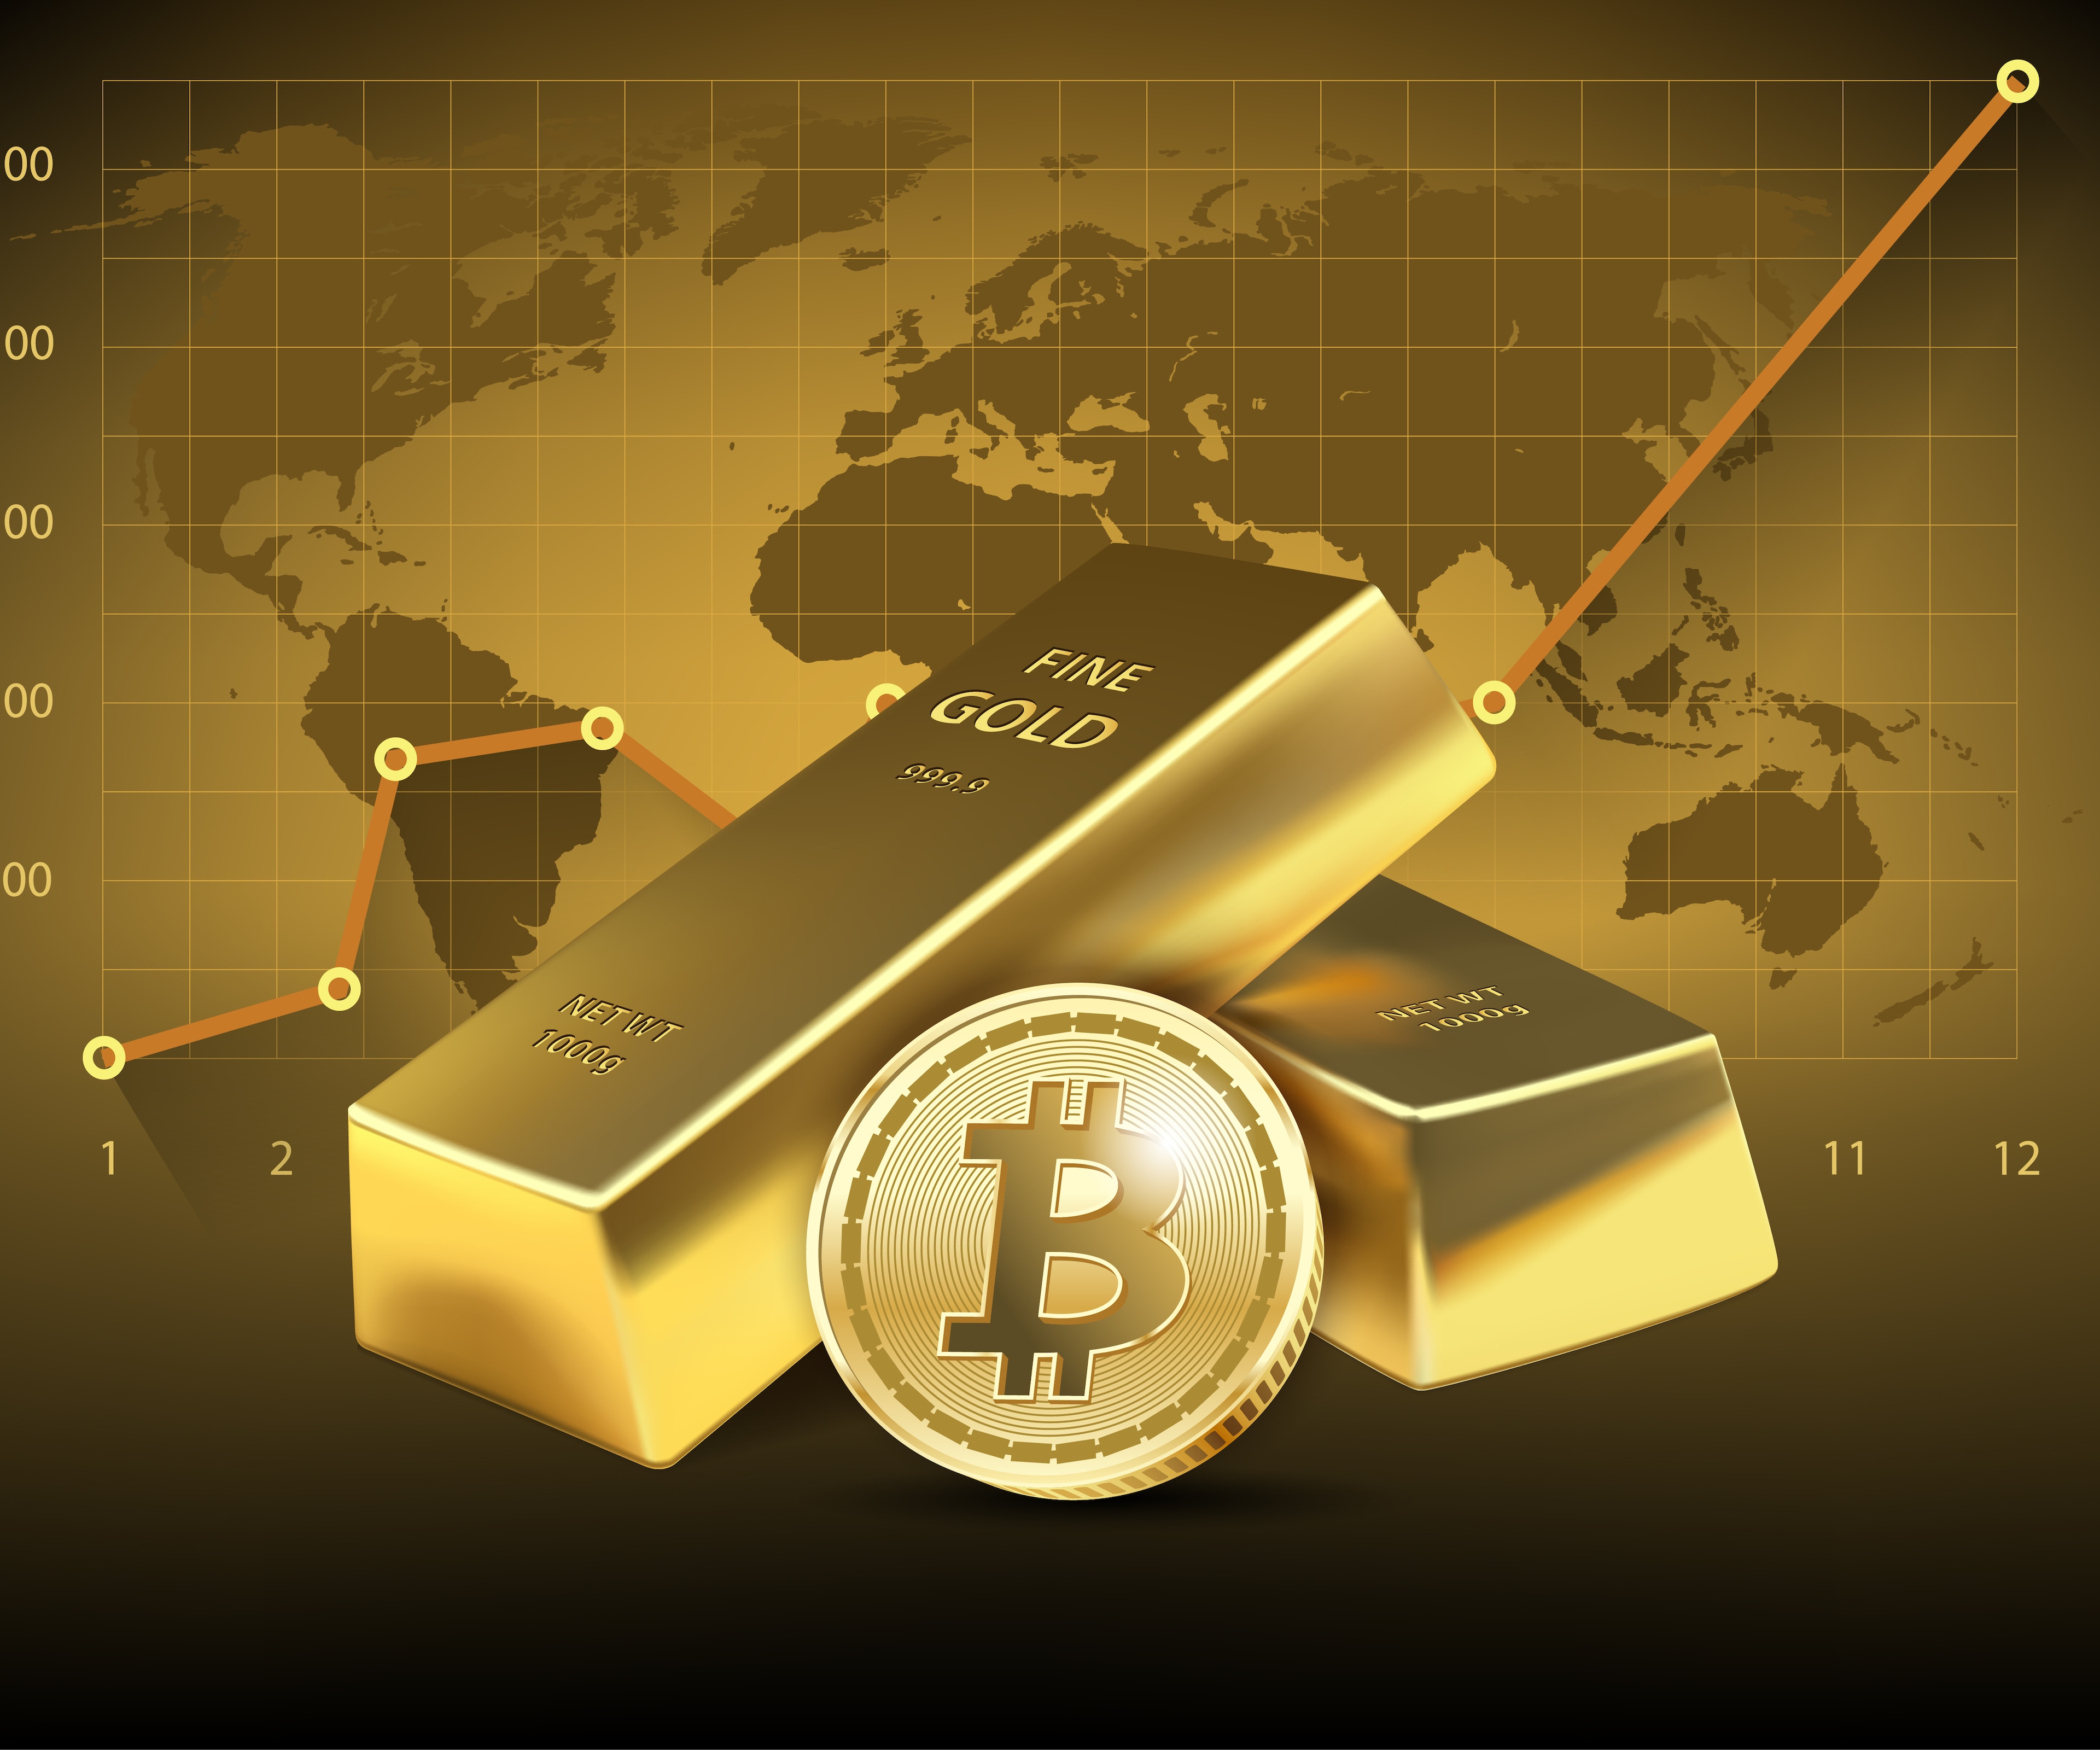 Gold vs. Bitcoin